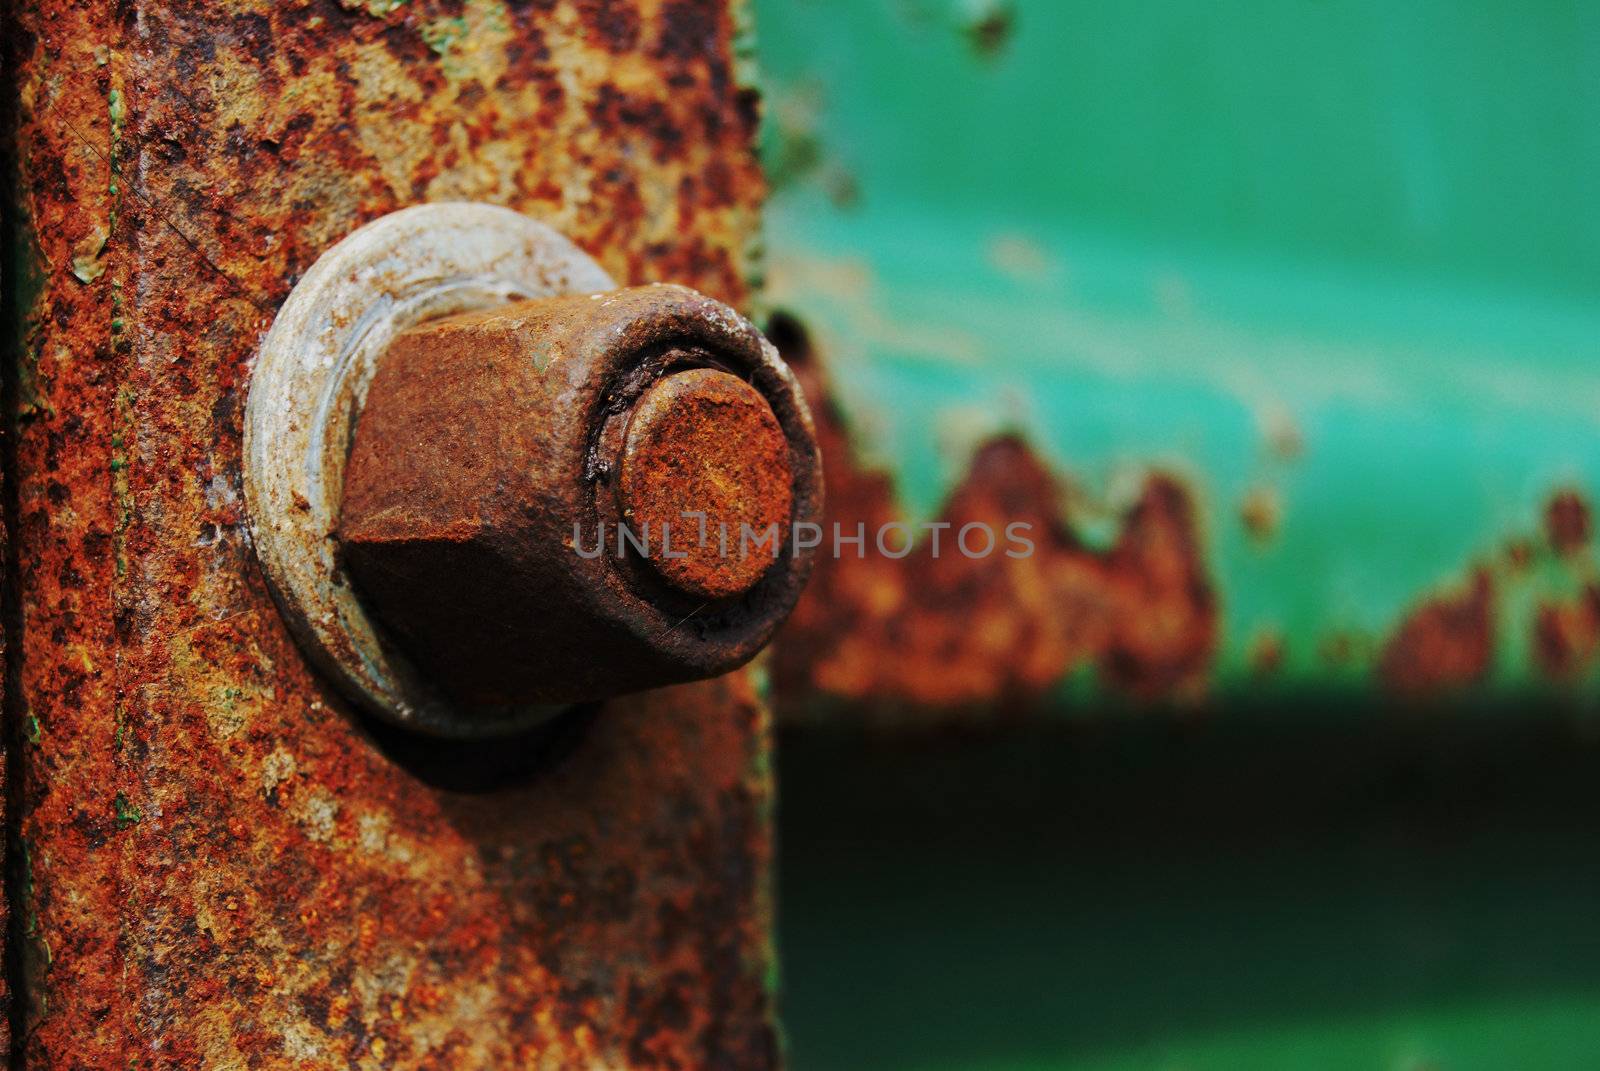 closeup of a rusty screw with copyspace